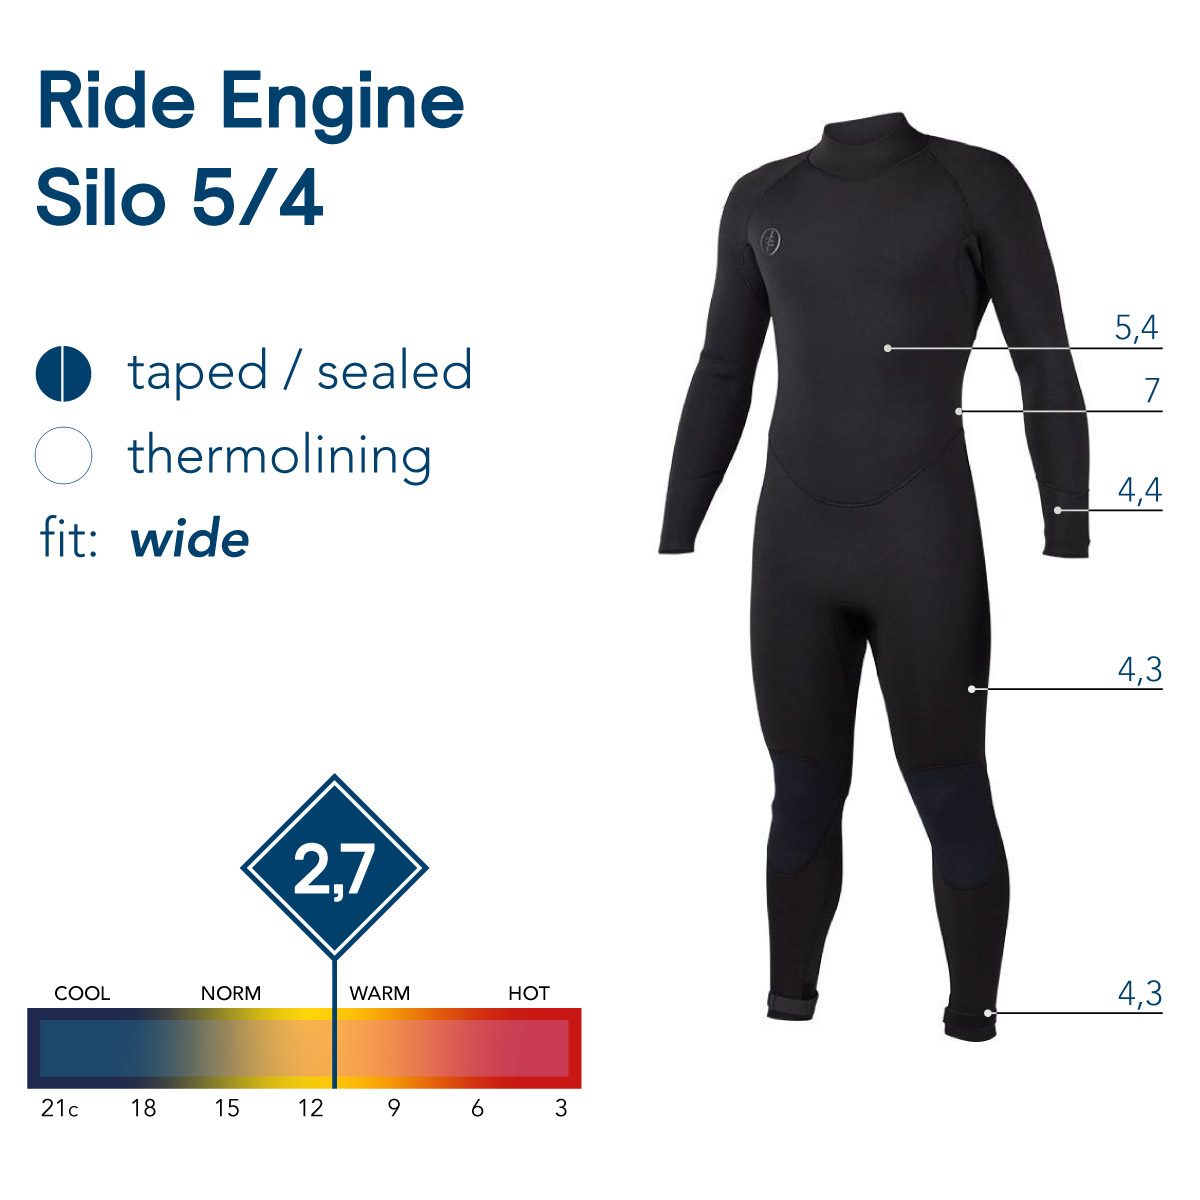 Ride Engine Silo Versus